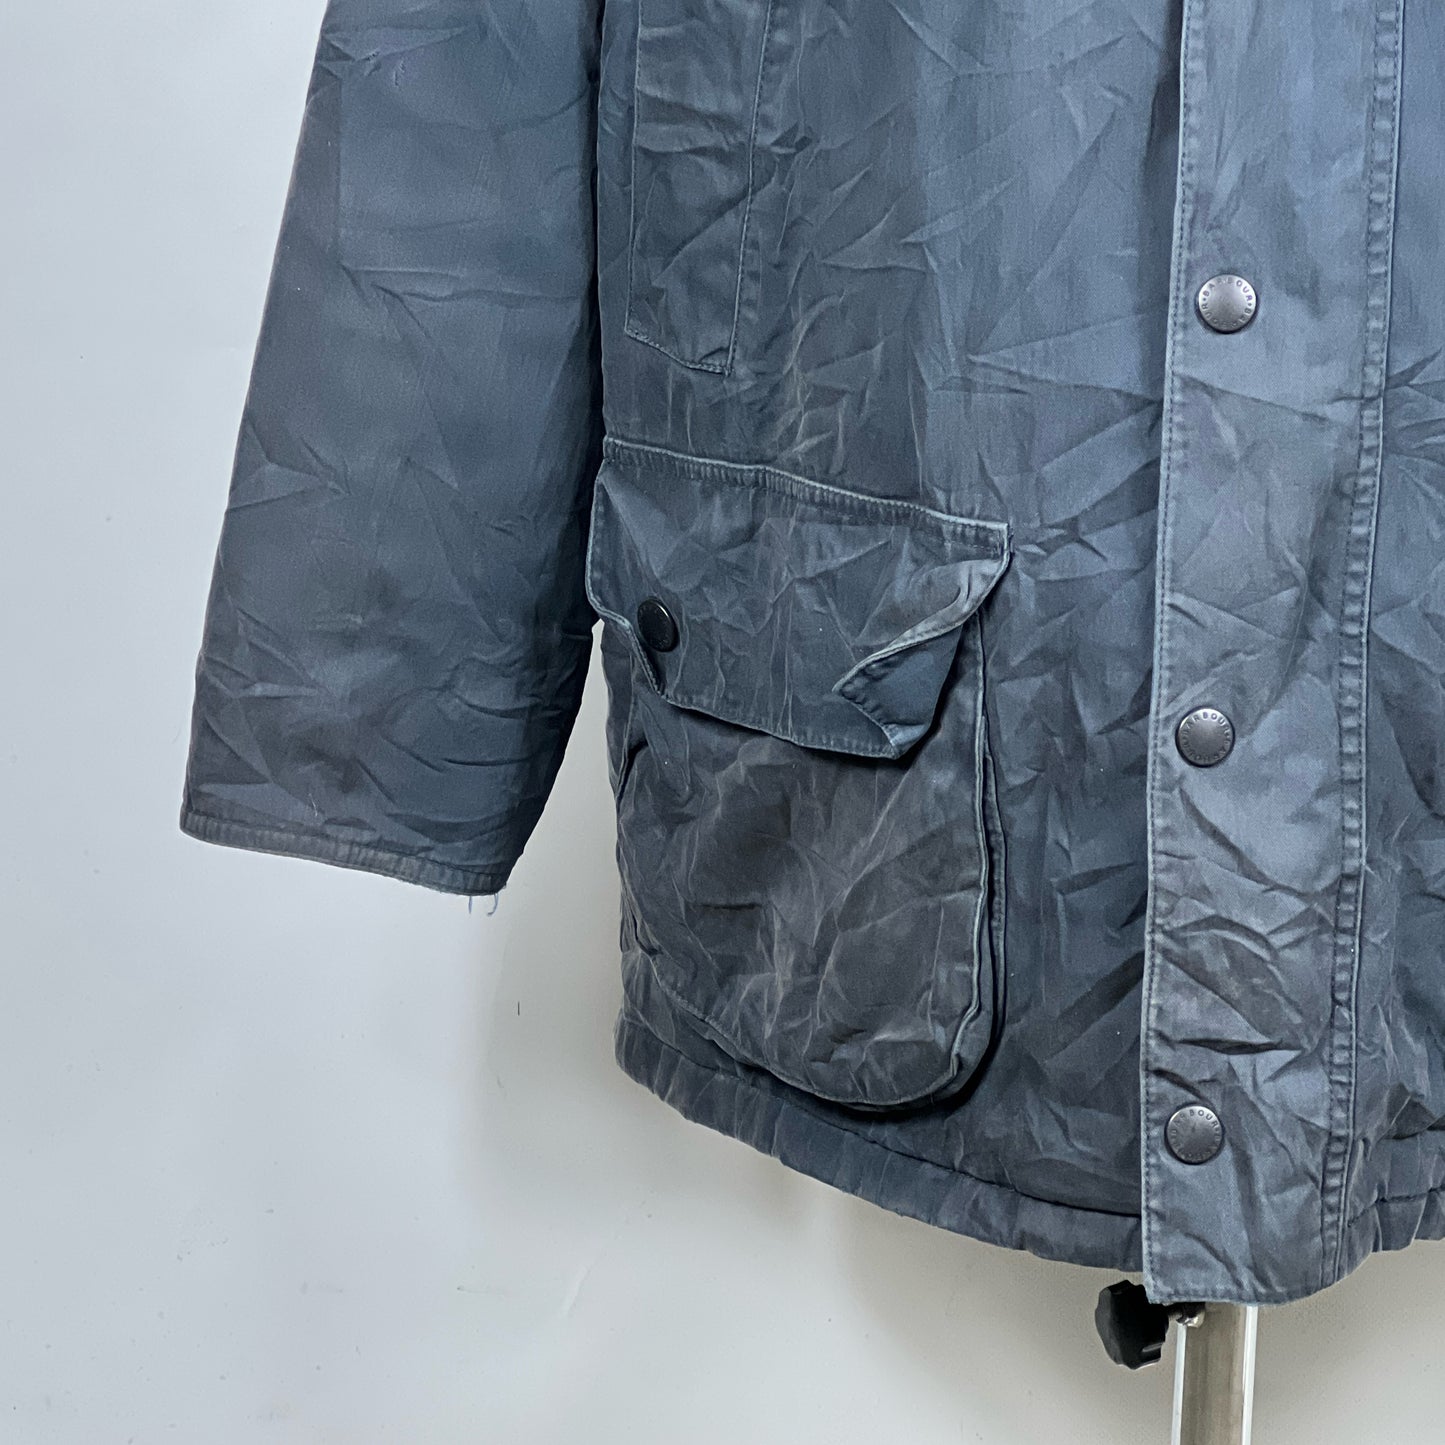 Giacca Barbour impermeabile Blu XL  Man Navy Waterproof jacket size XL